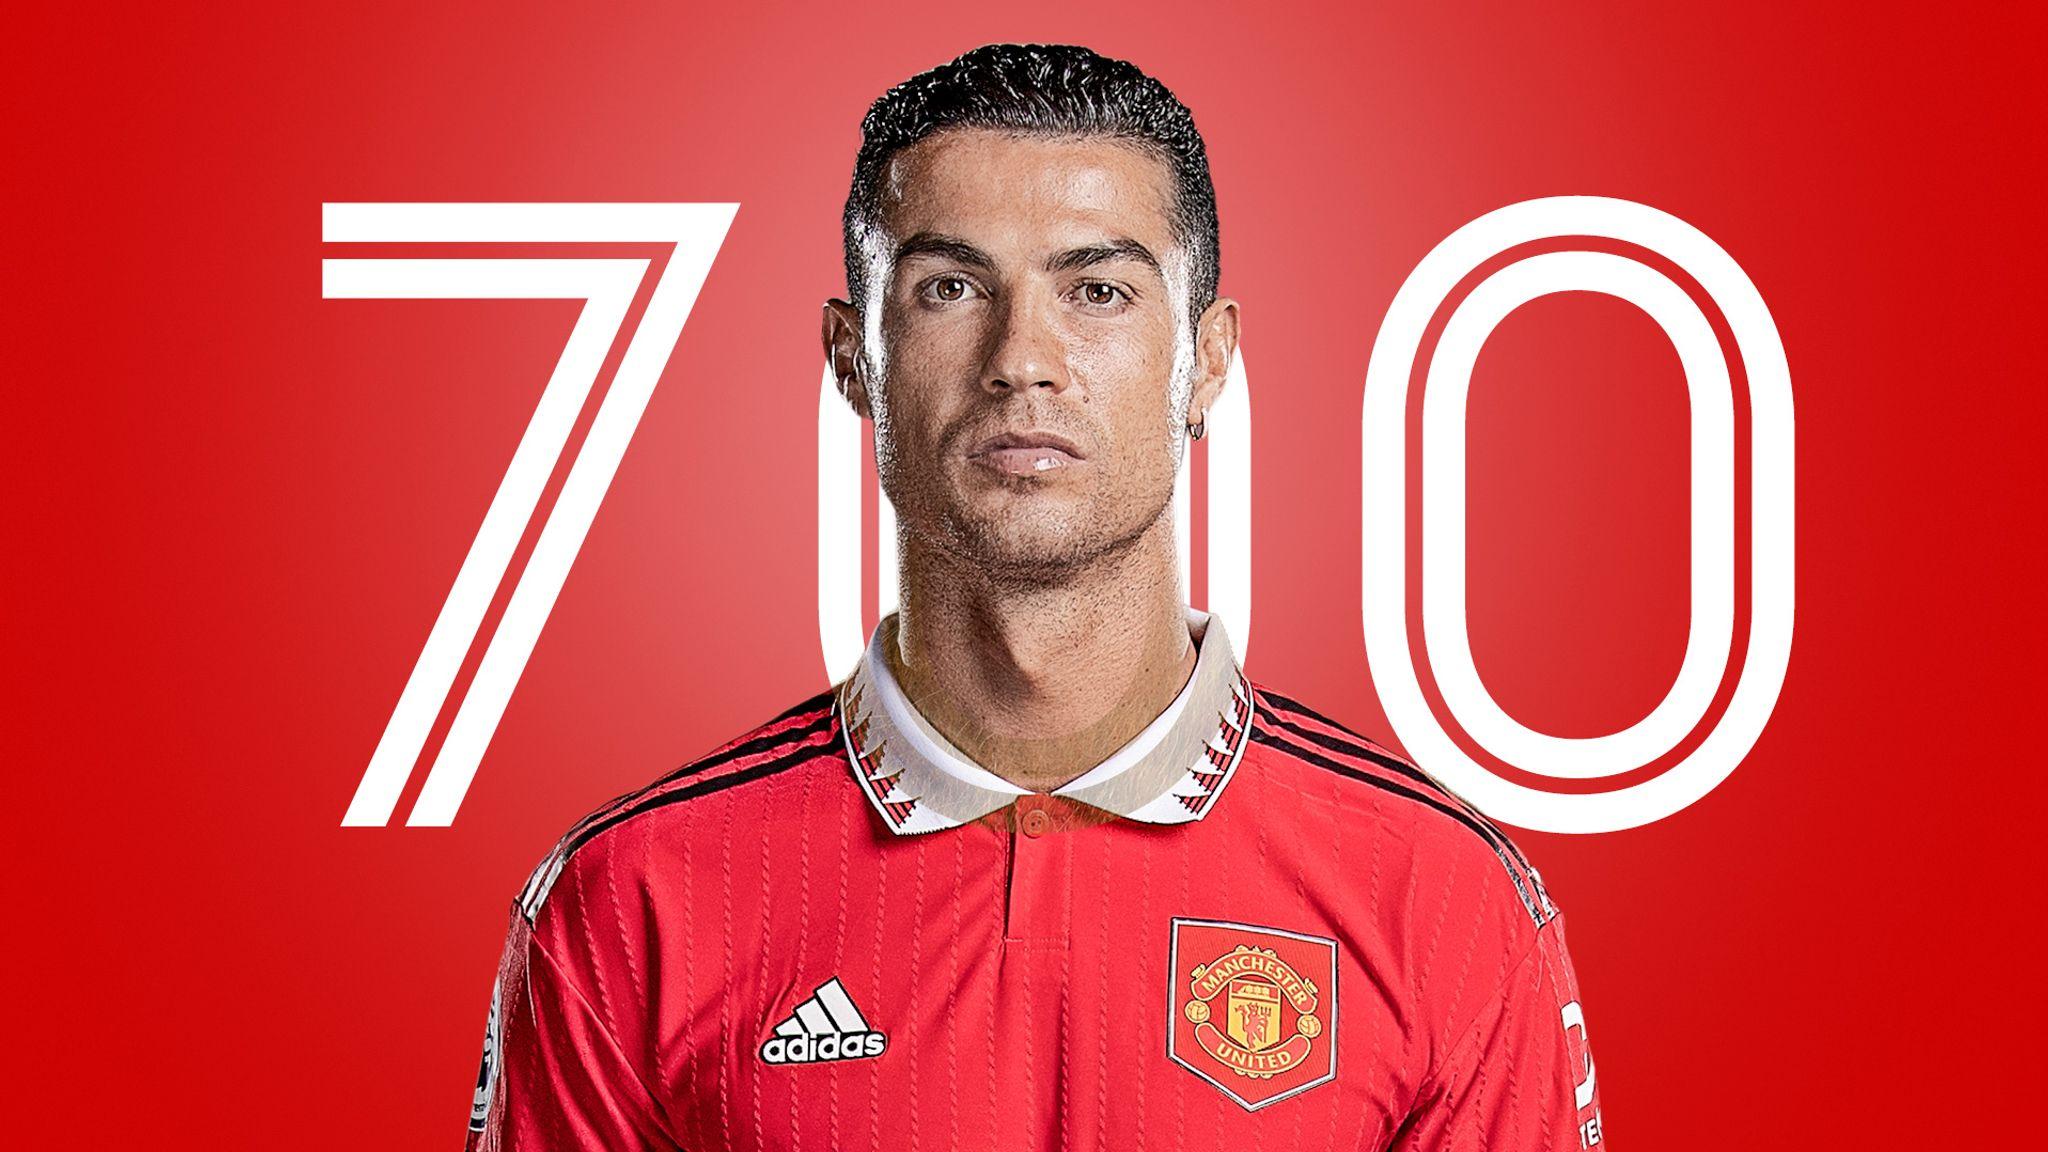 Cristiano Ronaldo reached record 700 club career goals_40.1